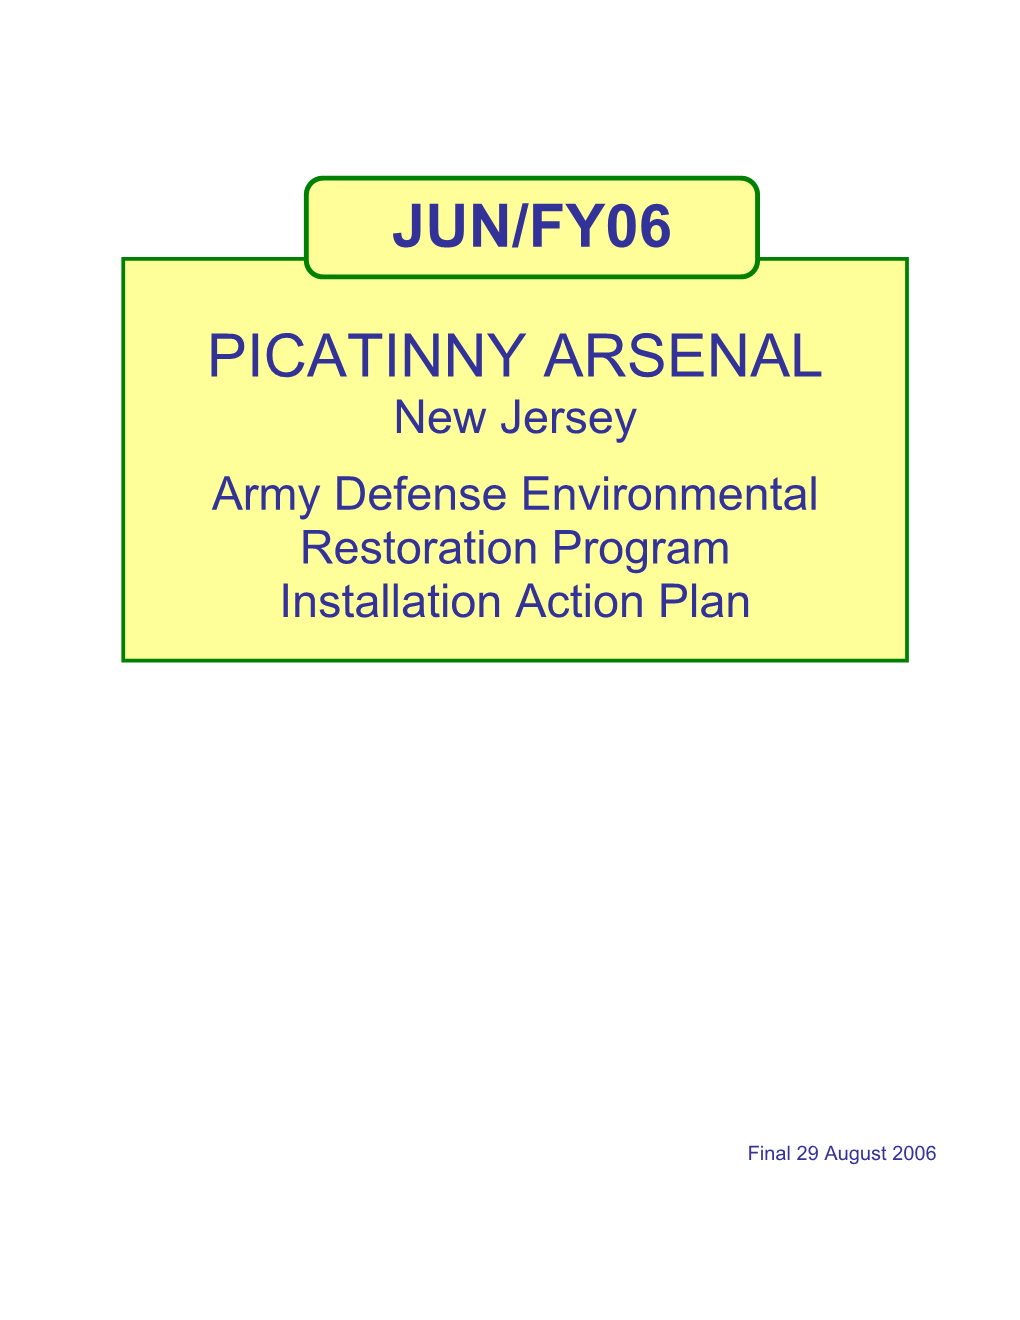 Picatinny IAP 20006.Pdf